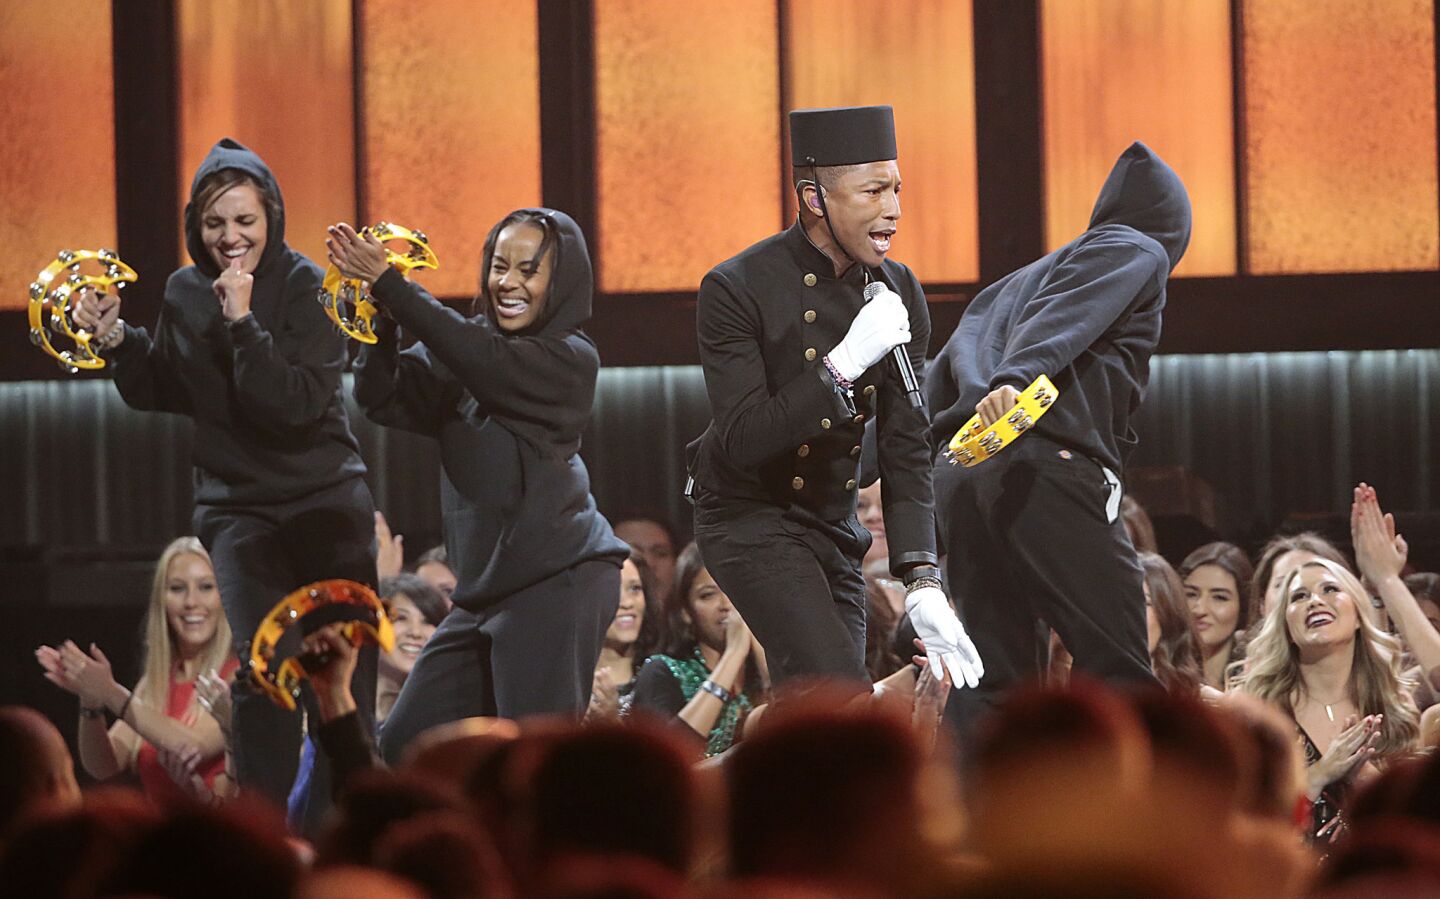 Grammy Awards 2015 | Show highlights